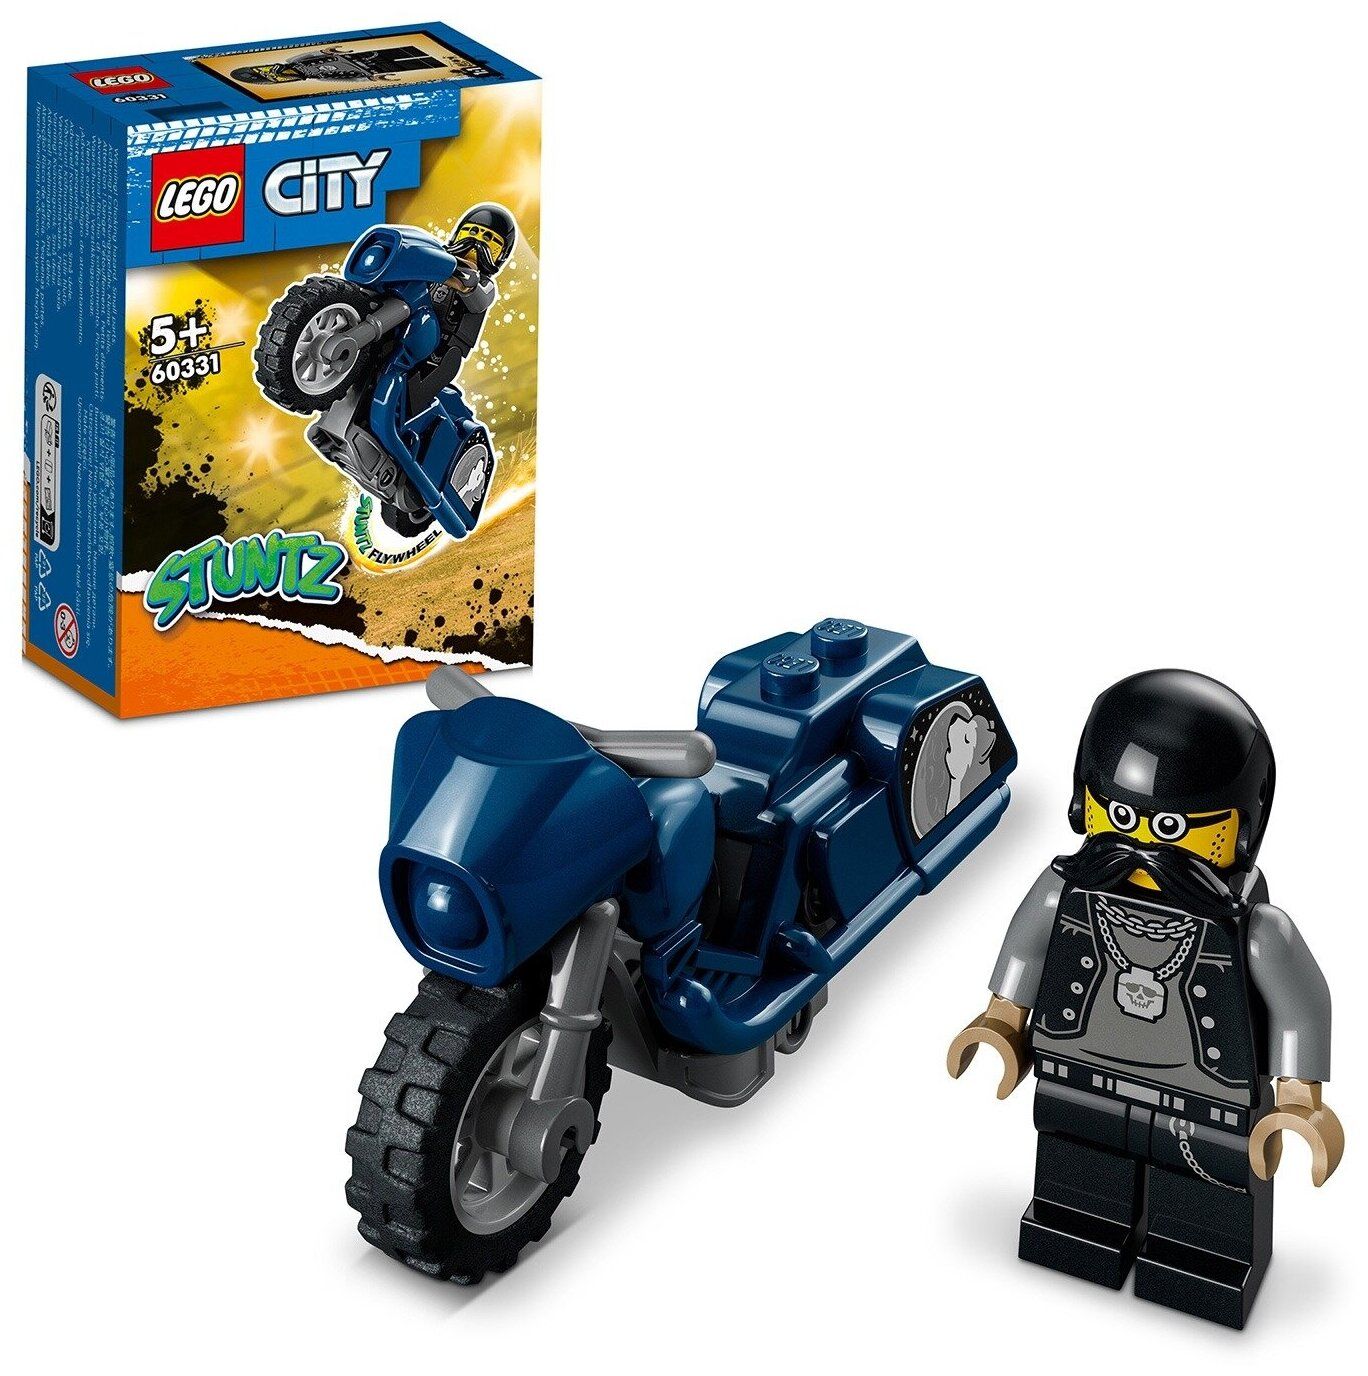 Конструктор LEGO 60331 City Touring Stunt Bike (Туристический трюковой мотоцикл) - фото 1